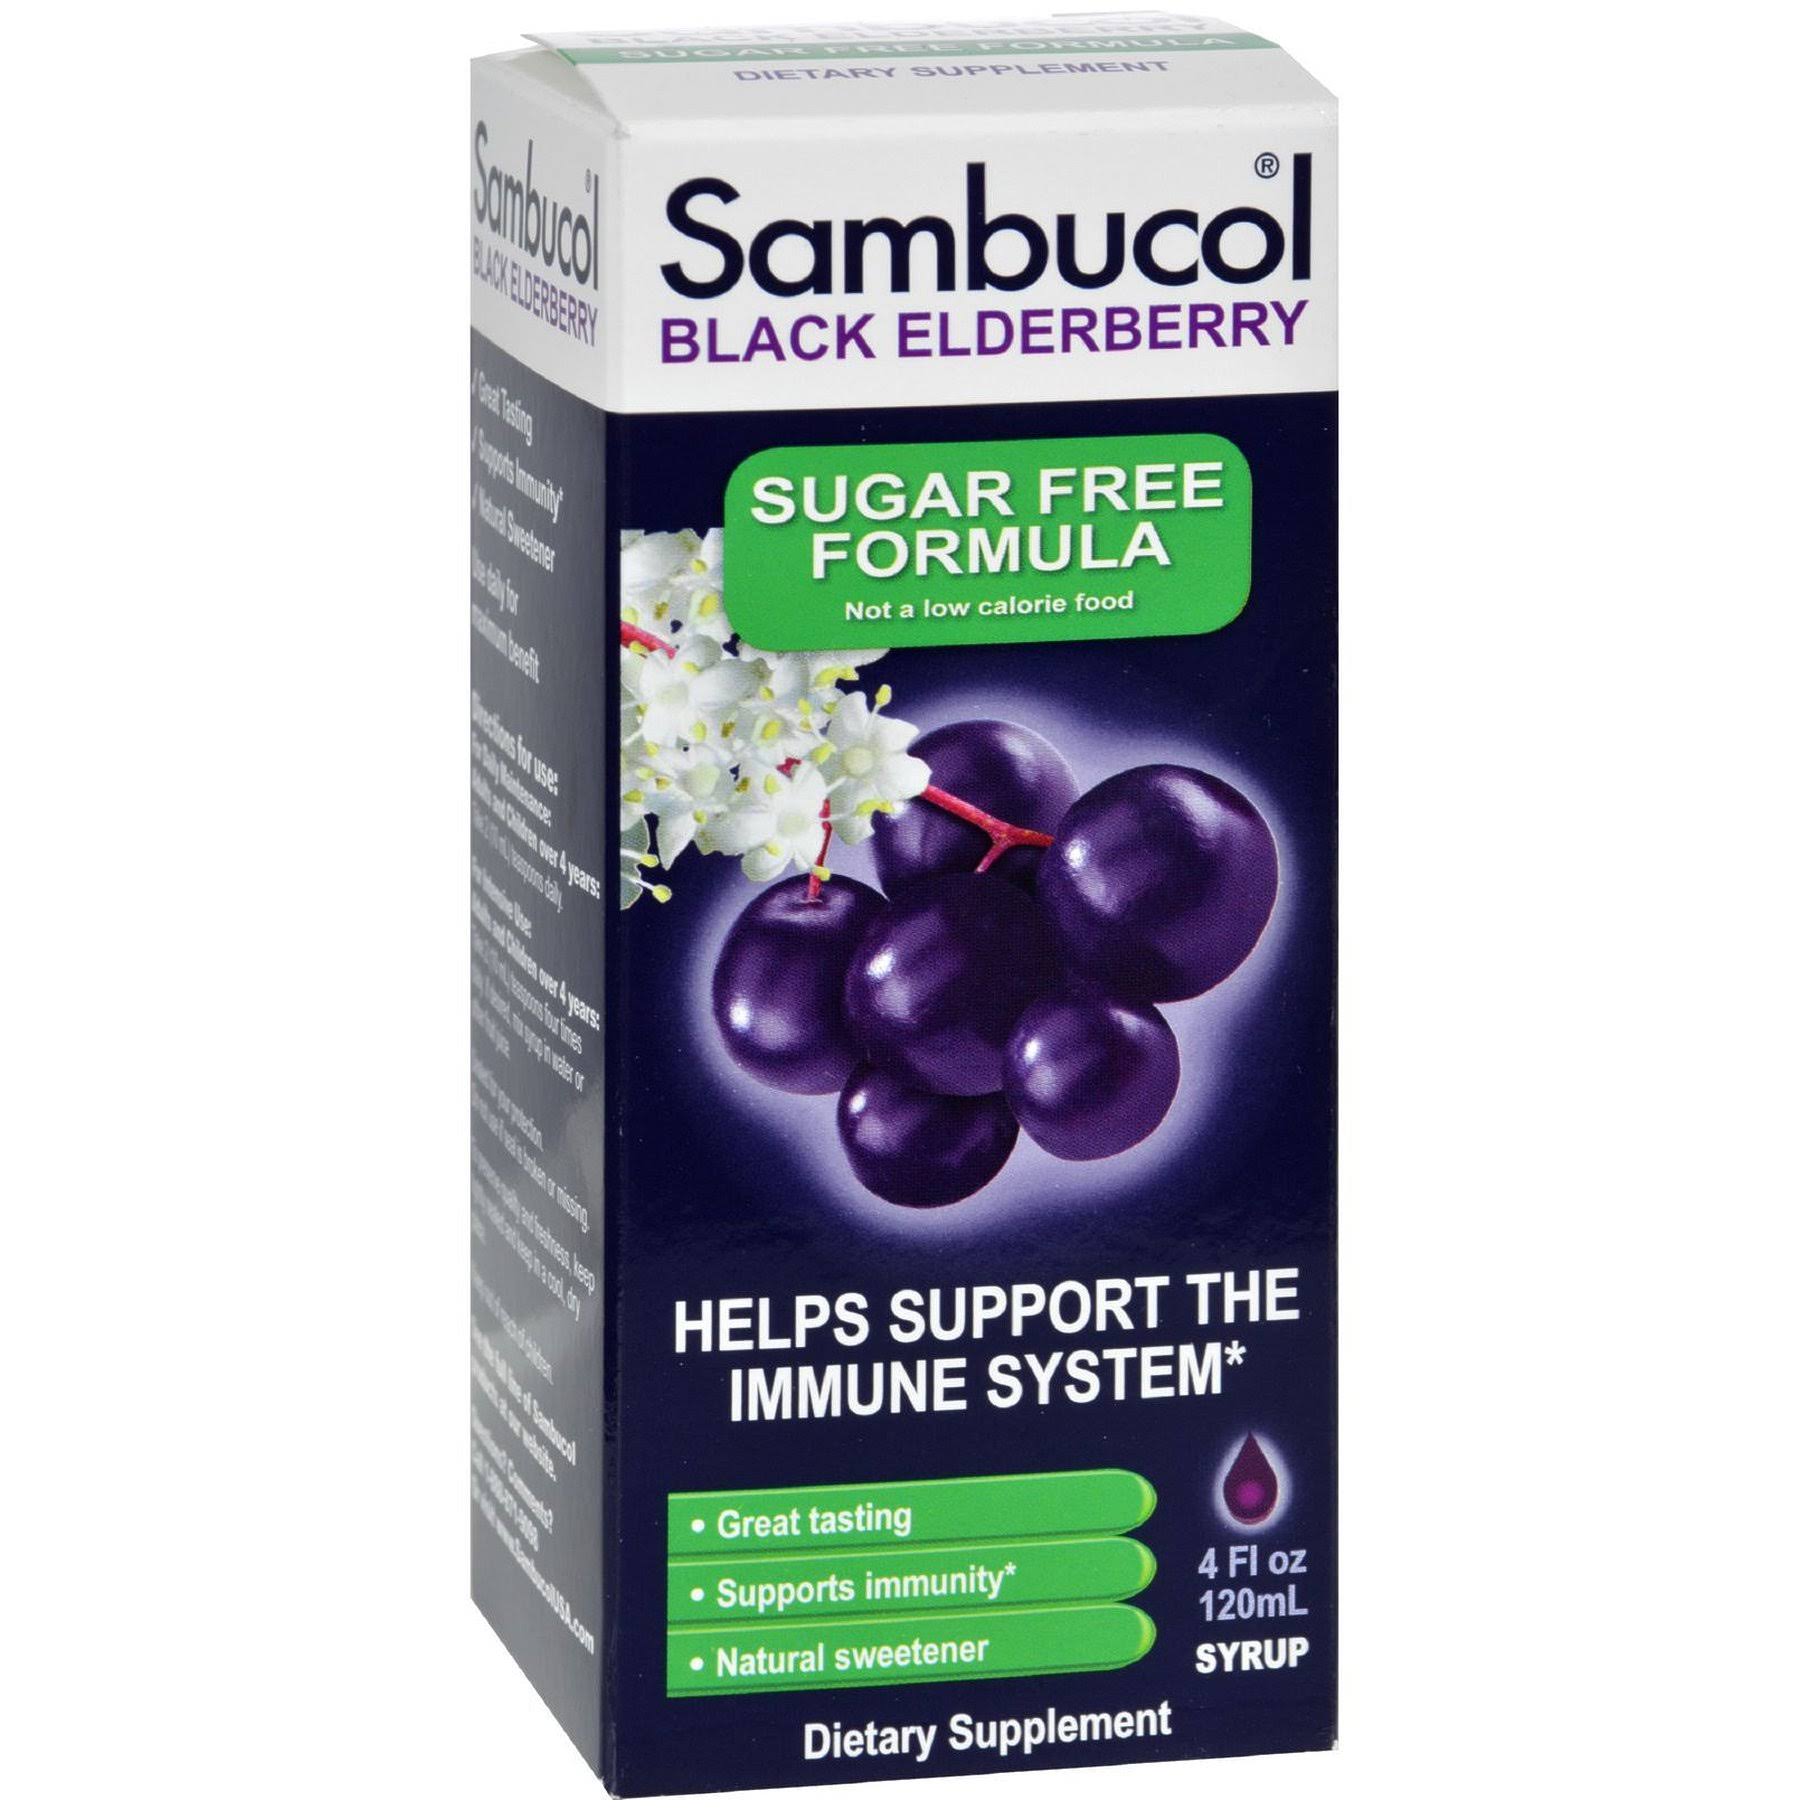 Sambucol Sugar Free Syrup Supplement - Black Elderberry, 4oz